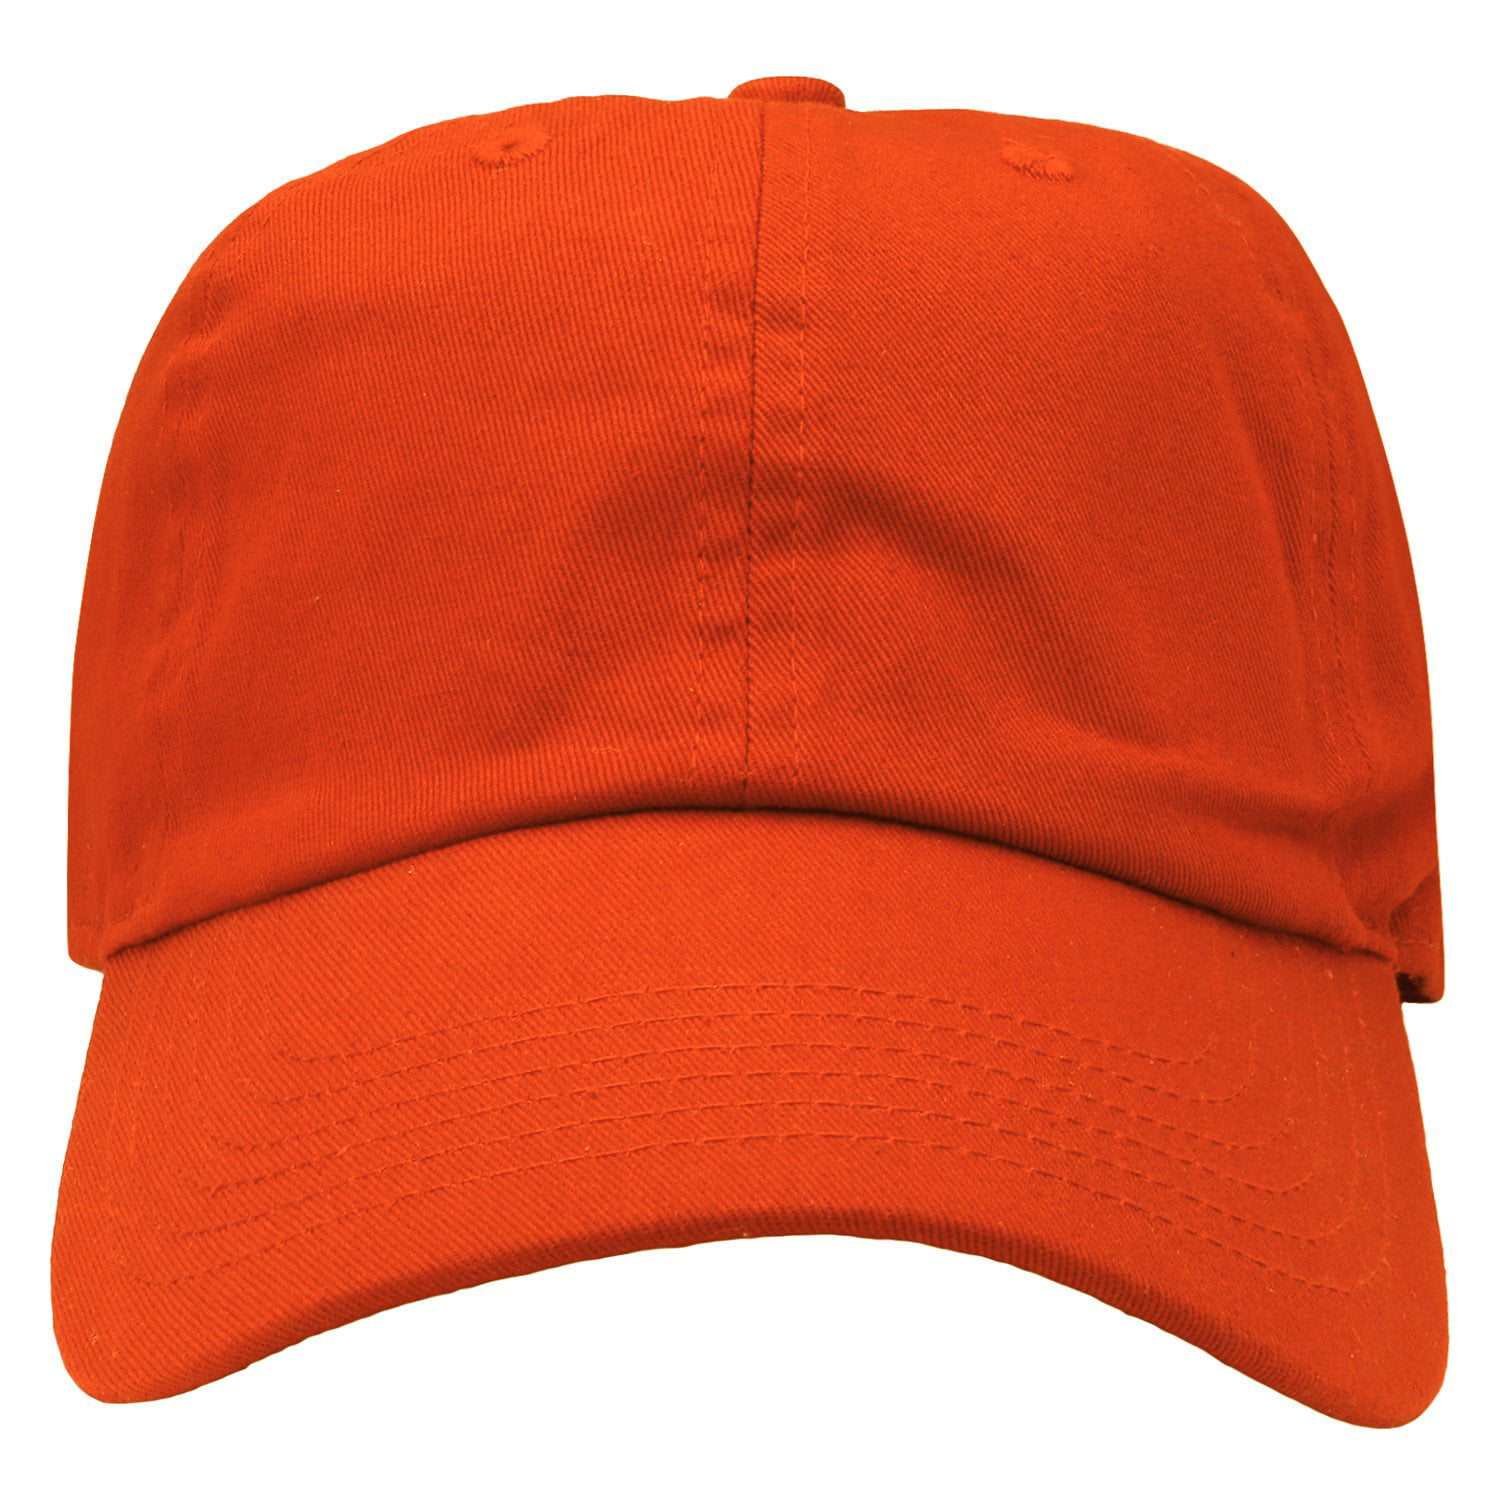 Newhattan Plain 100% Cotton Hat Men Women Adjustable Baseball Cap 